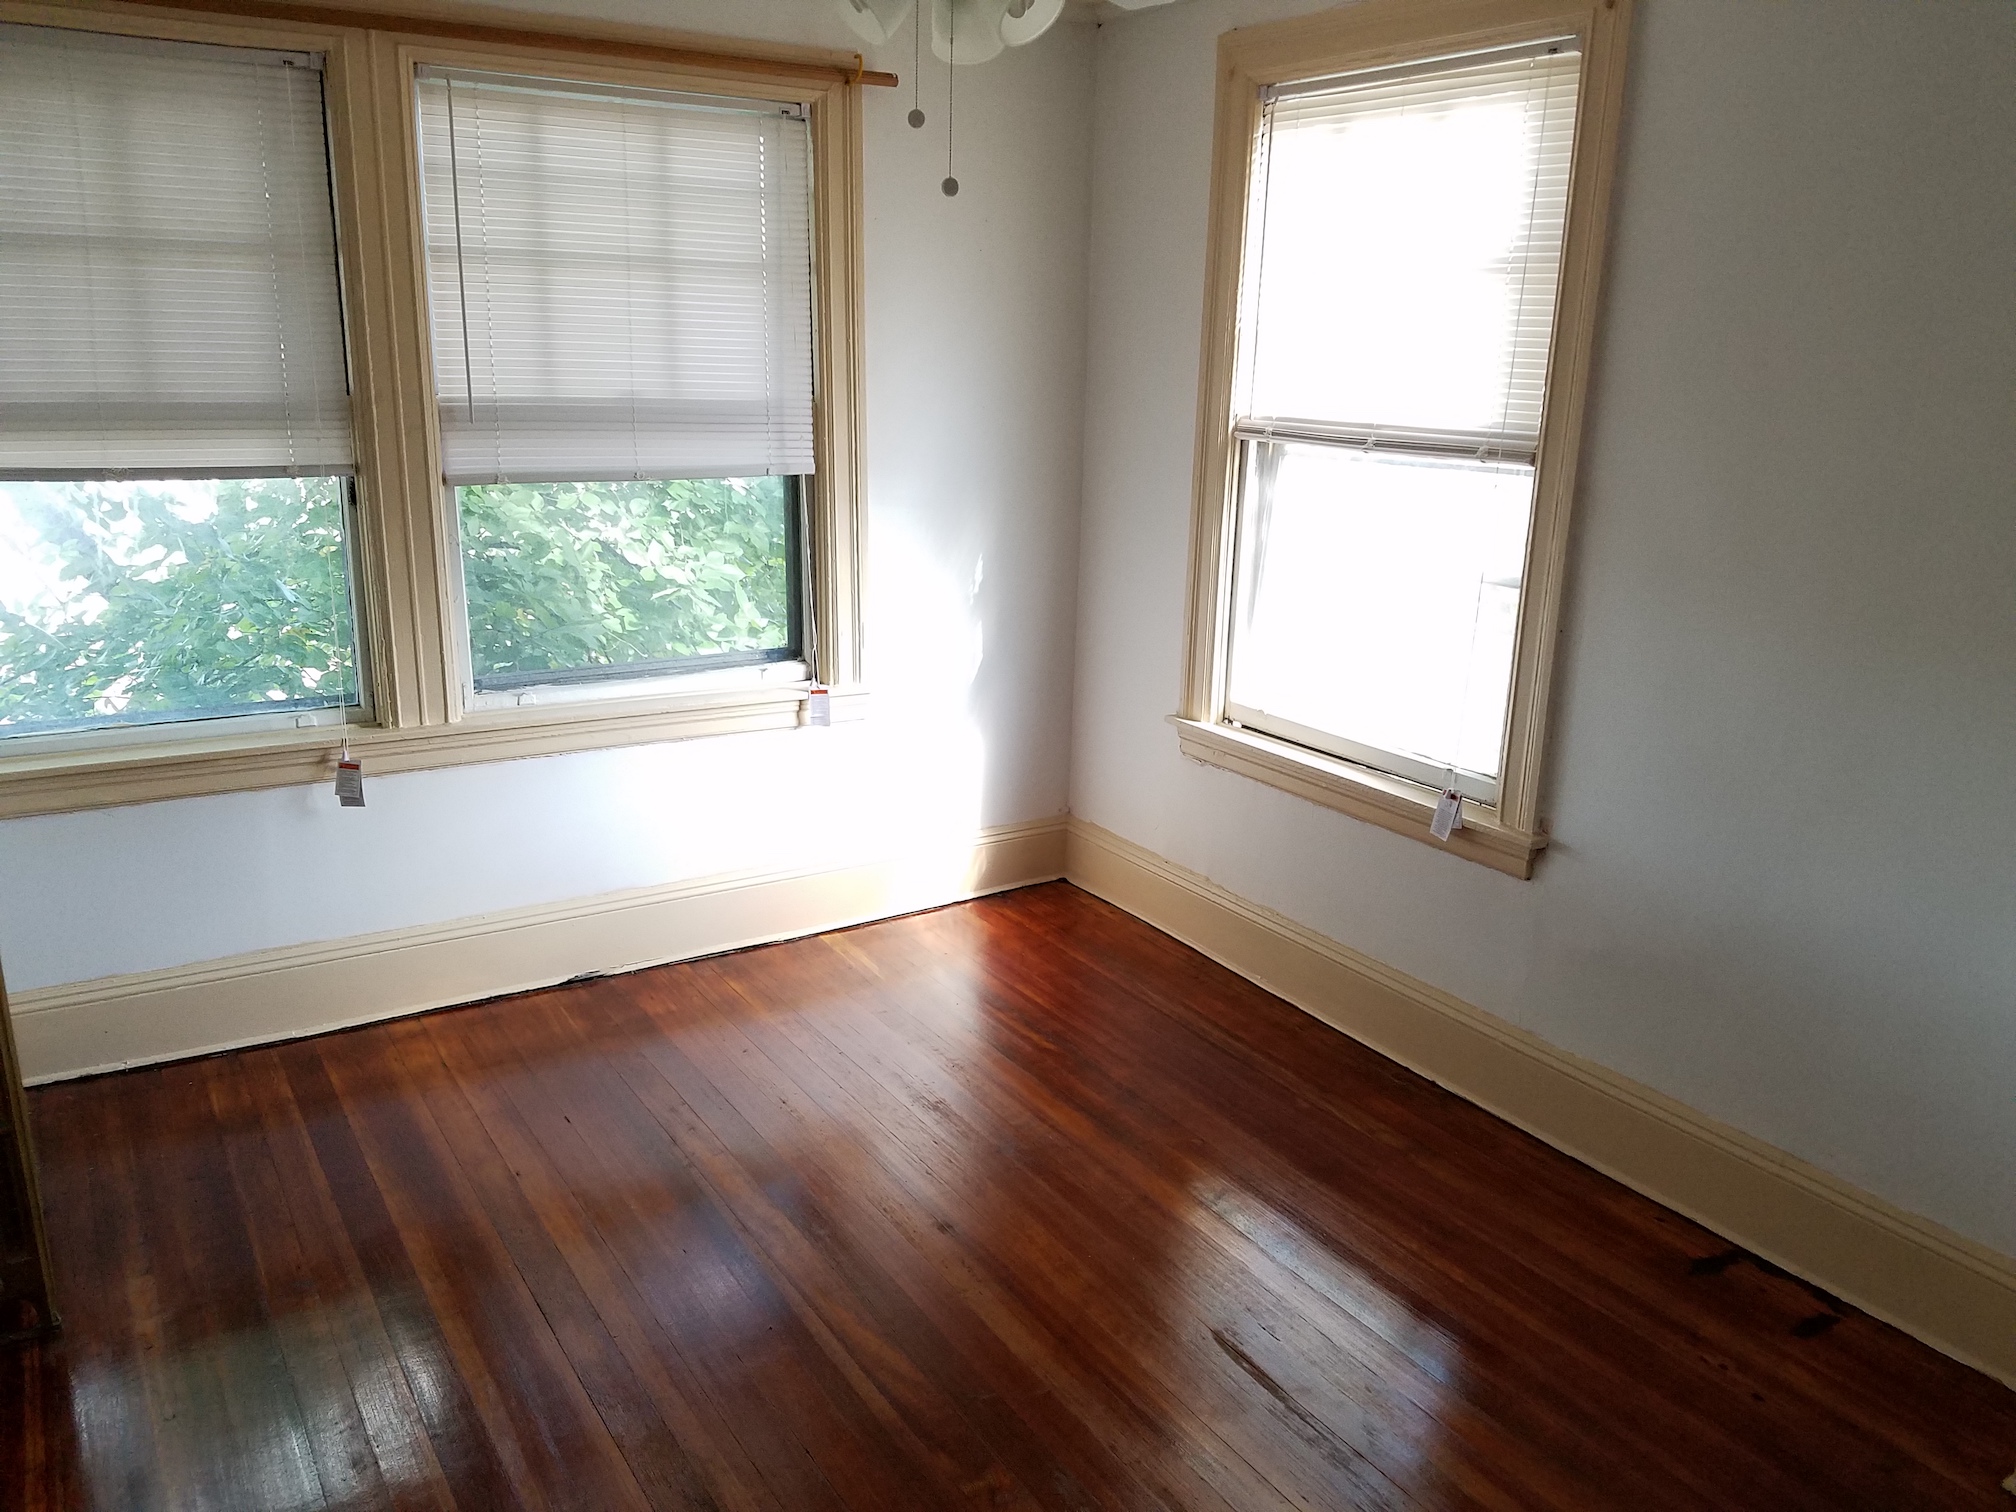 Photos of apartment on Wadsworth St.,Boston MA 02134